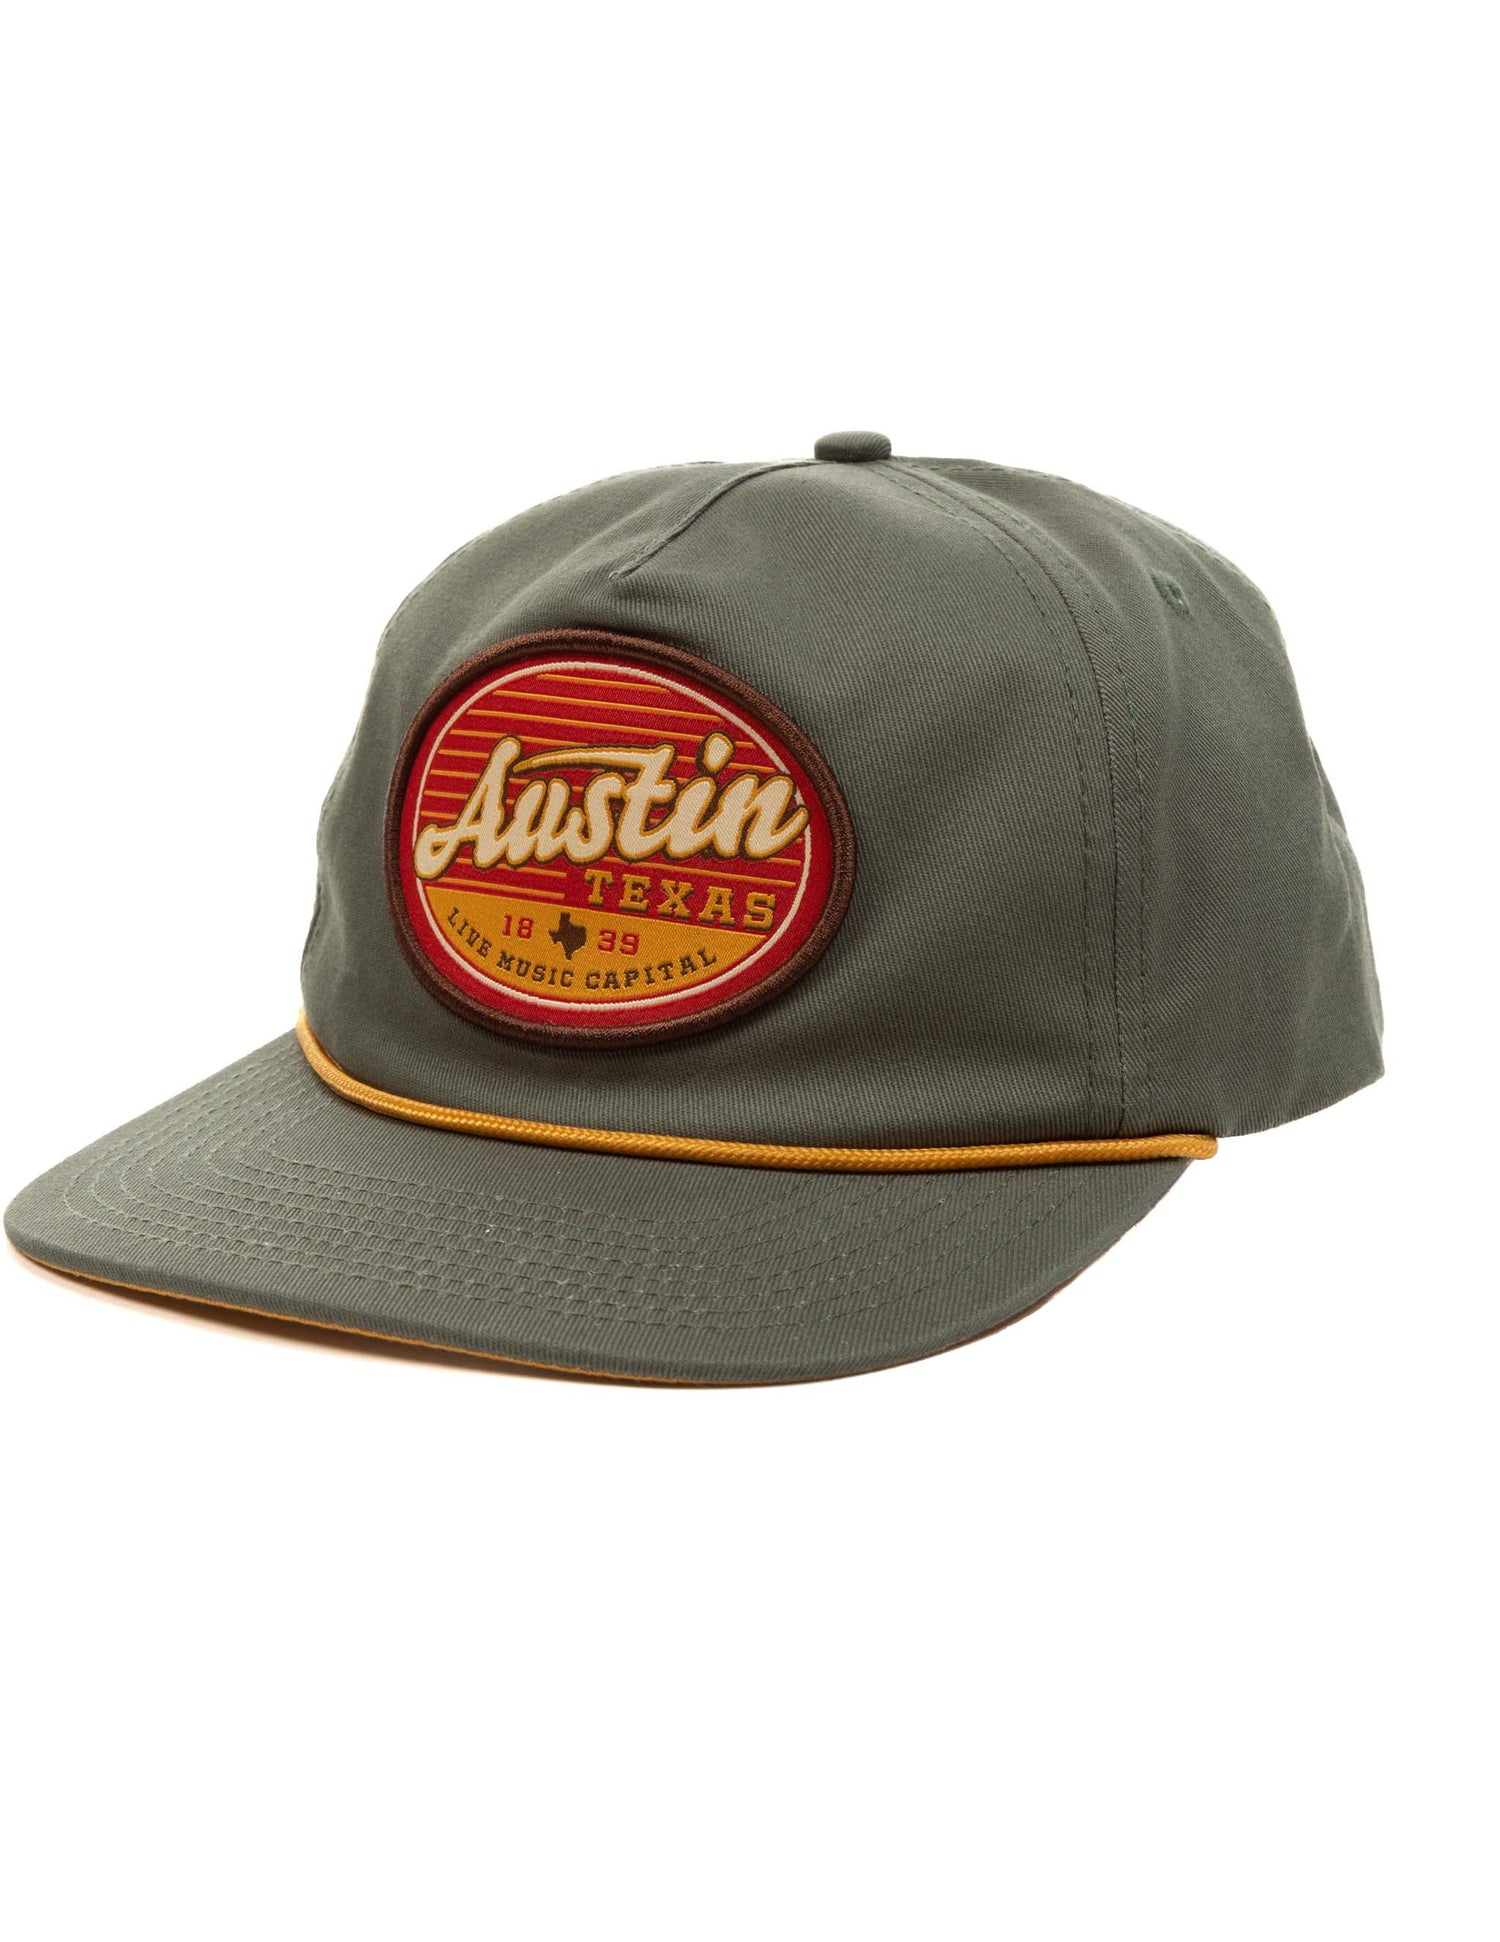 Austin Texas Live Music Capital Patch Hat